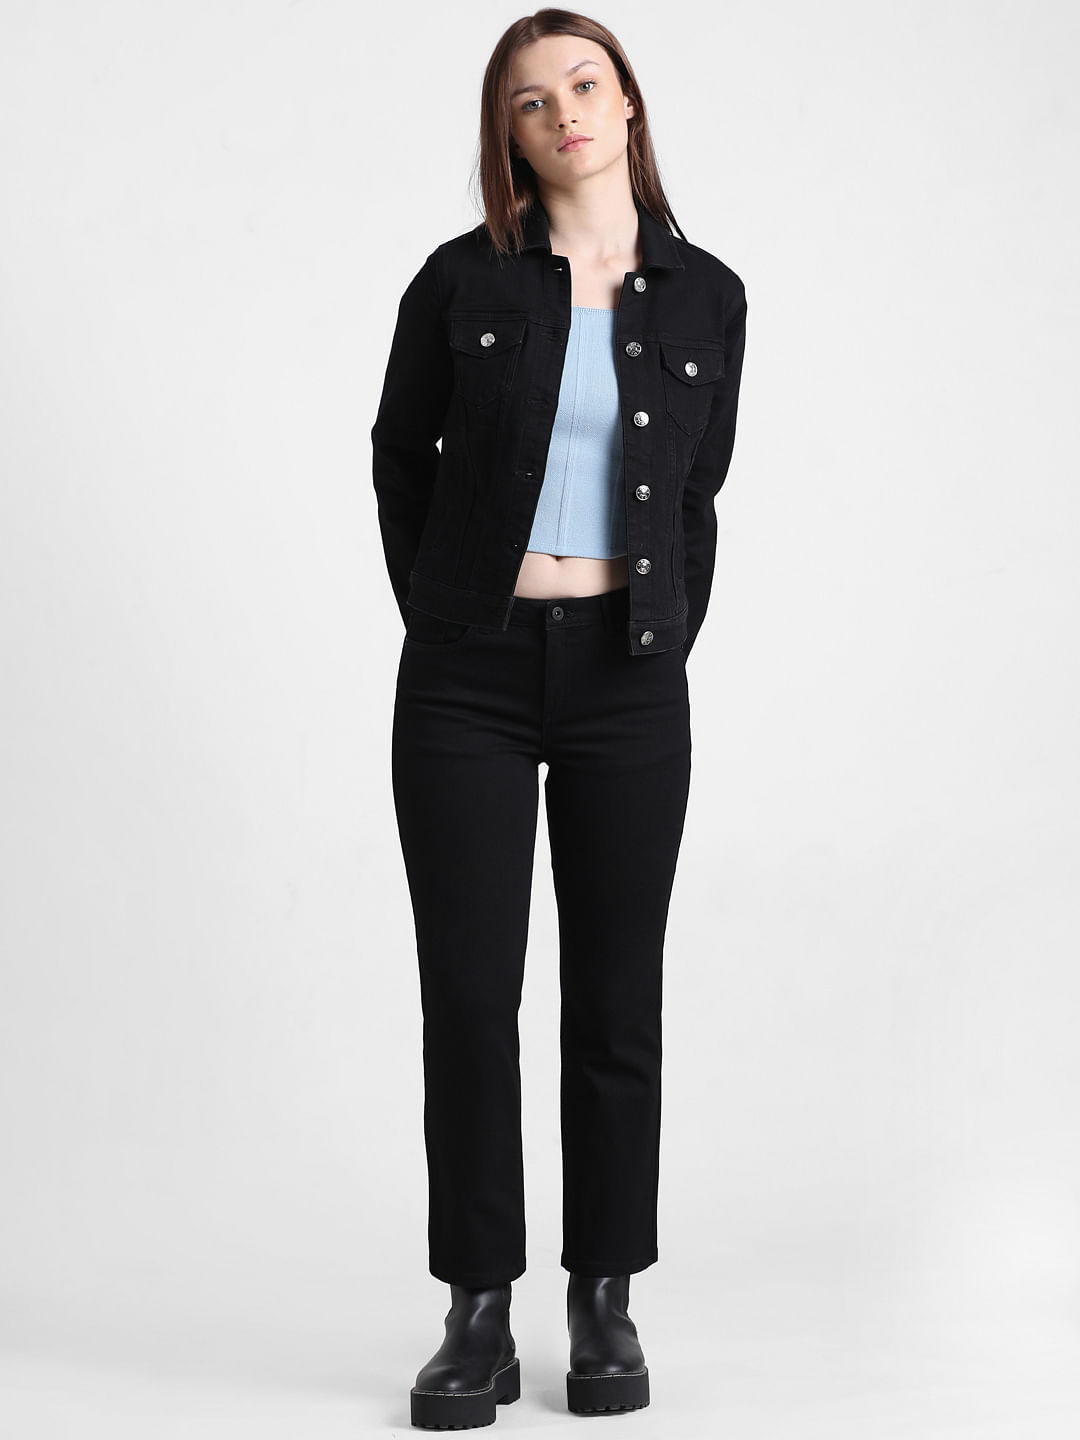 Buy Blue Jackets & Coats for Men by Marks & Spencer Online | Ajio.com